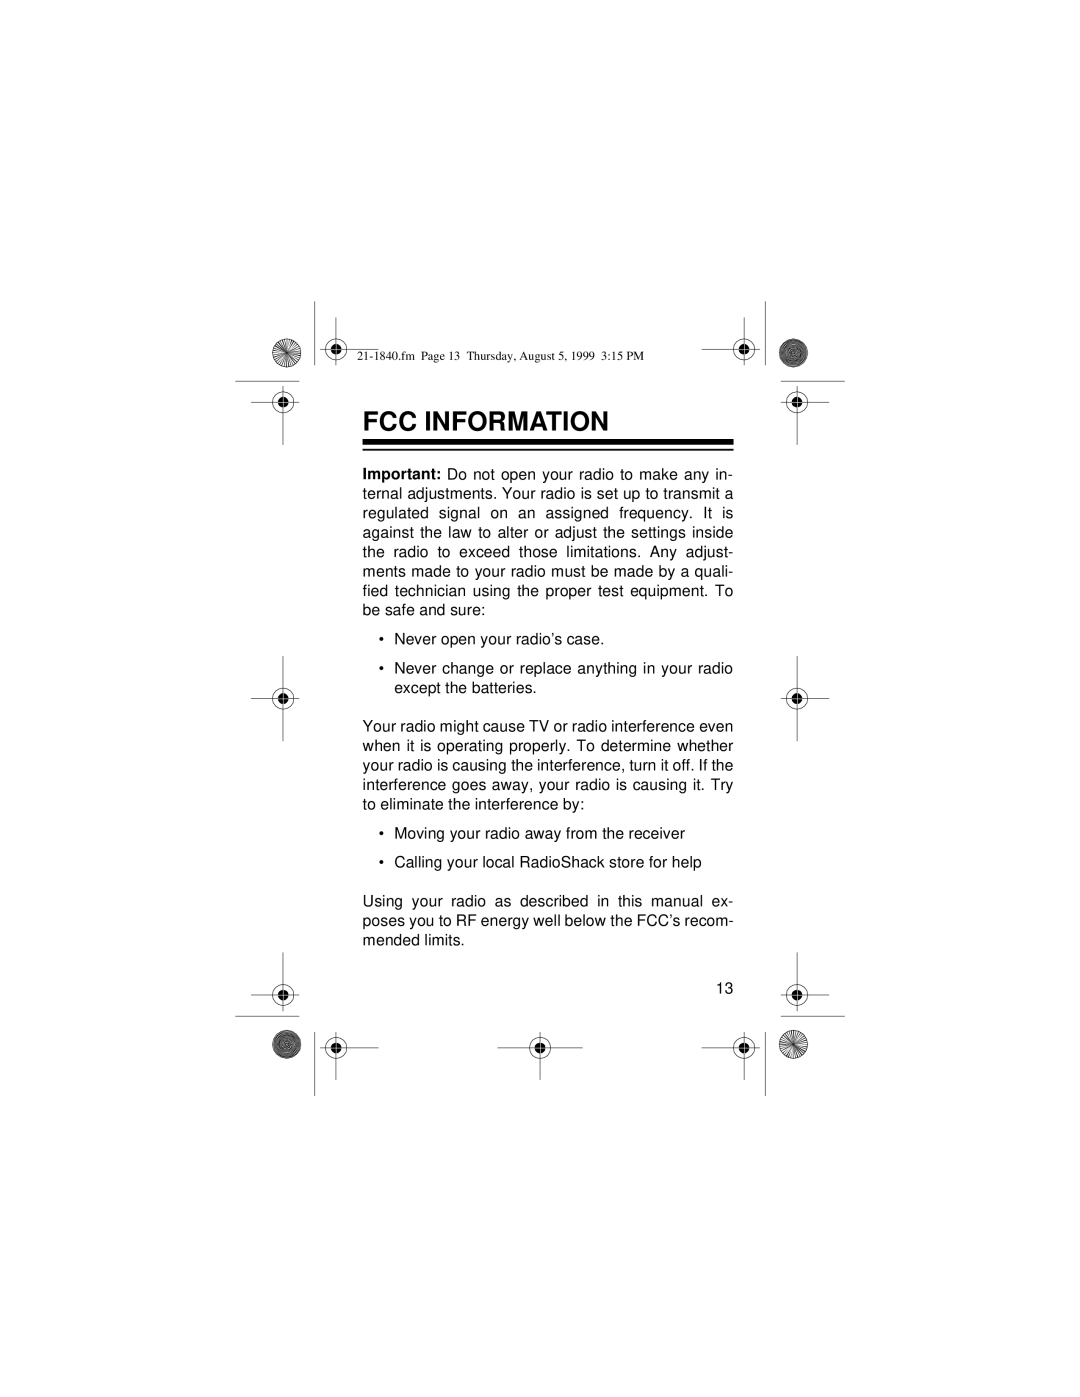 Radio Shack 21-1840 owner manual Fcc Information 